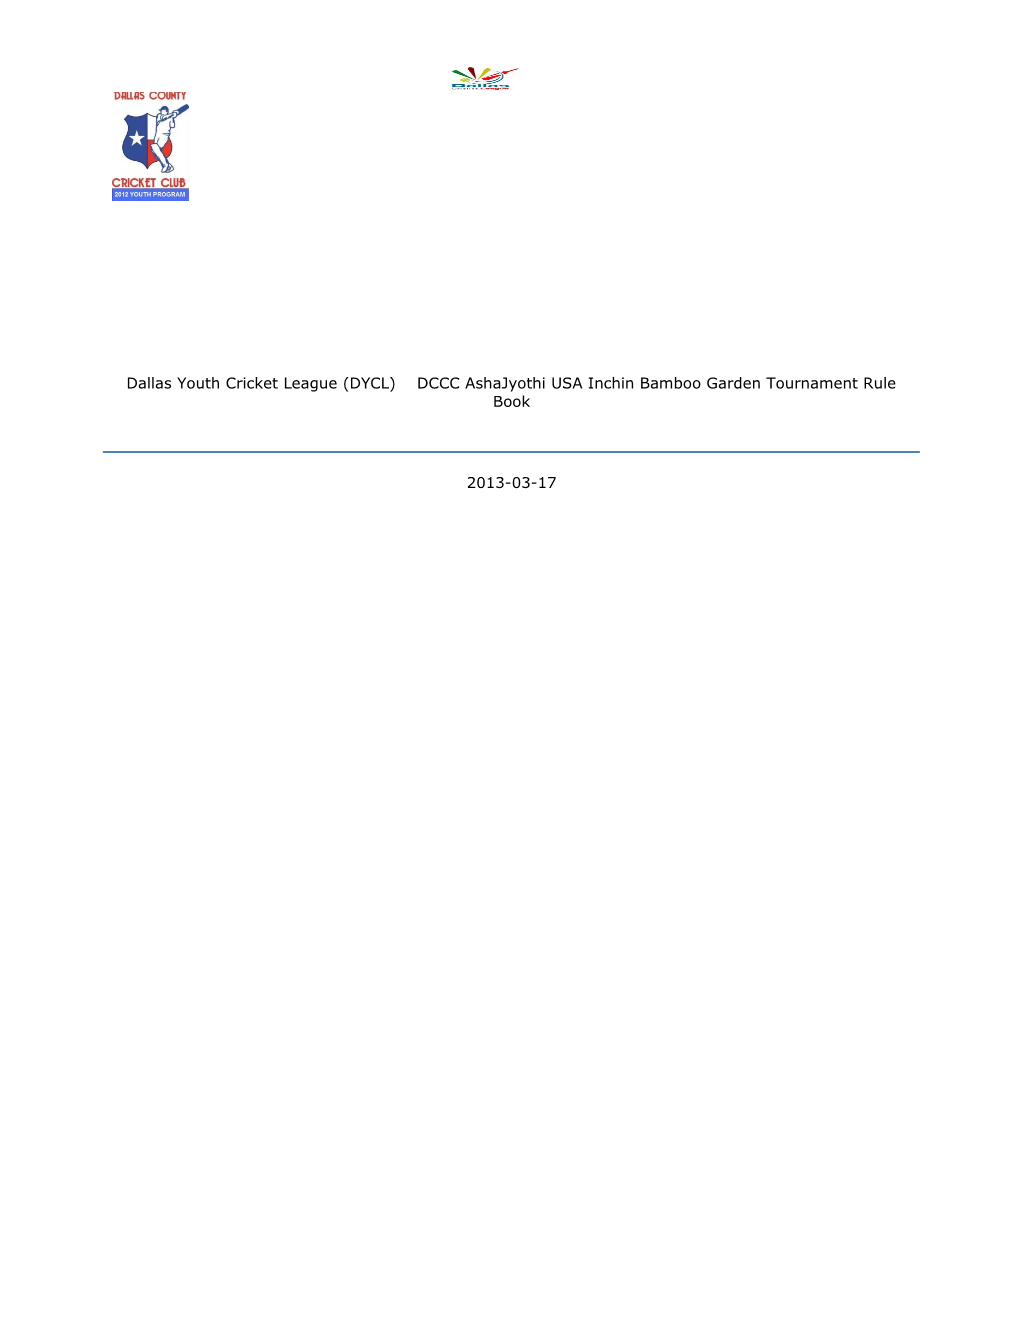 Dallas Youth Cricket League (DYCL) DCCC Ashajyothi USA Inchin Bamboo Garden Tournament Rule Book